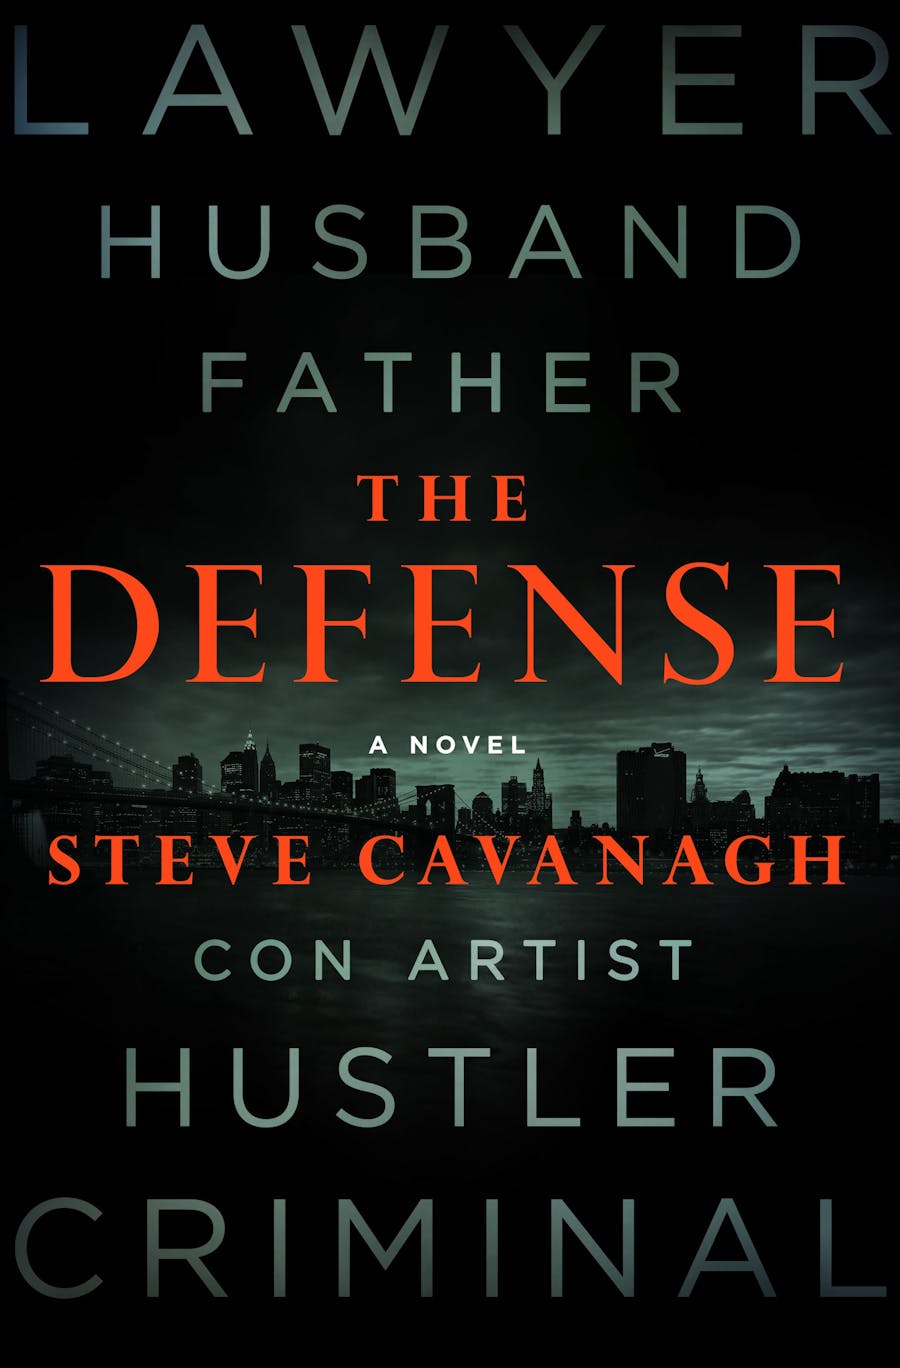 The Defense by Steve Cavanagh